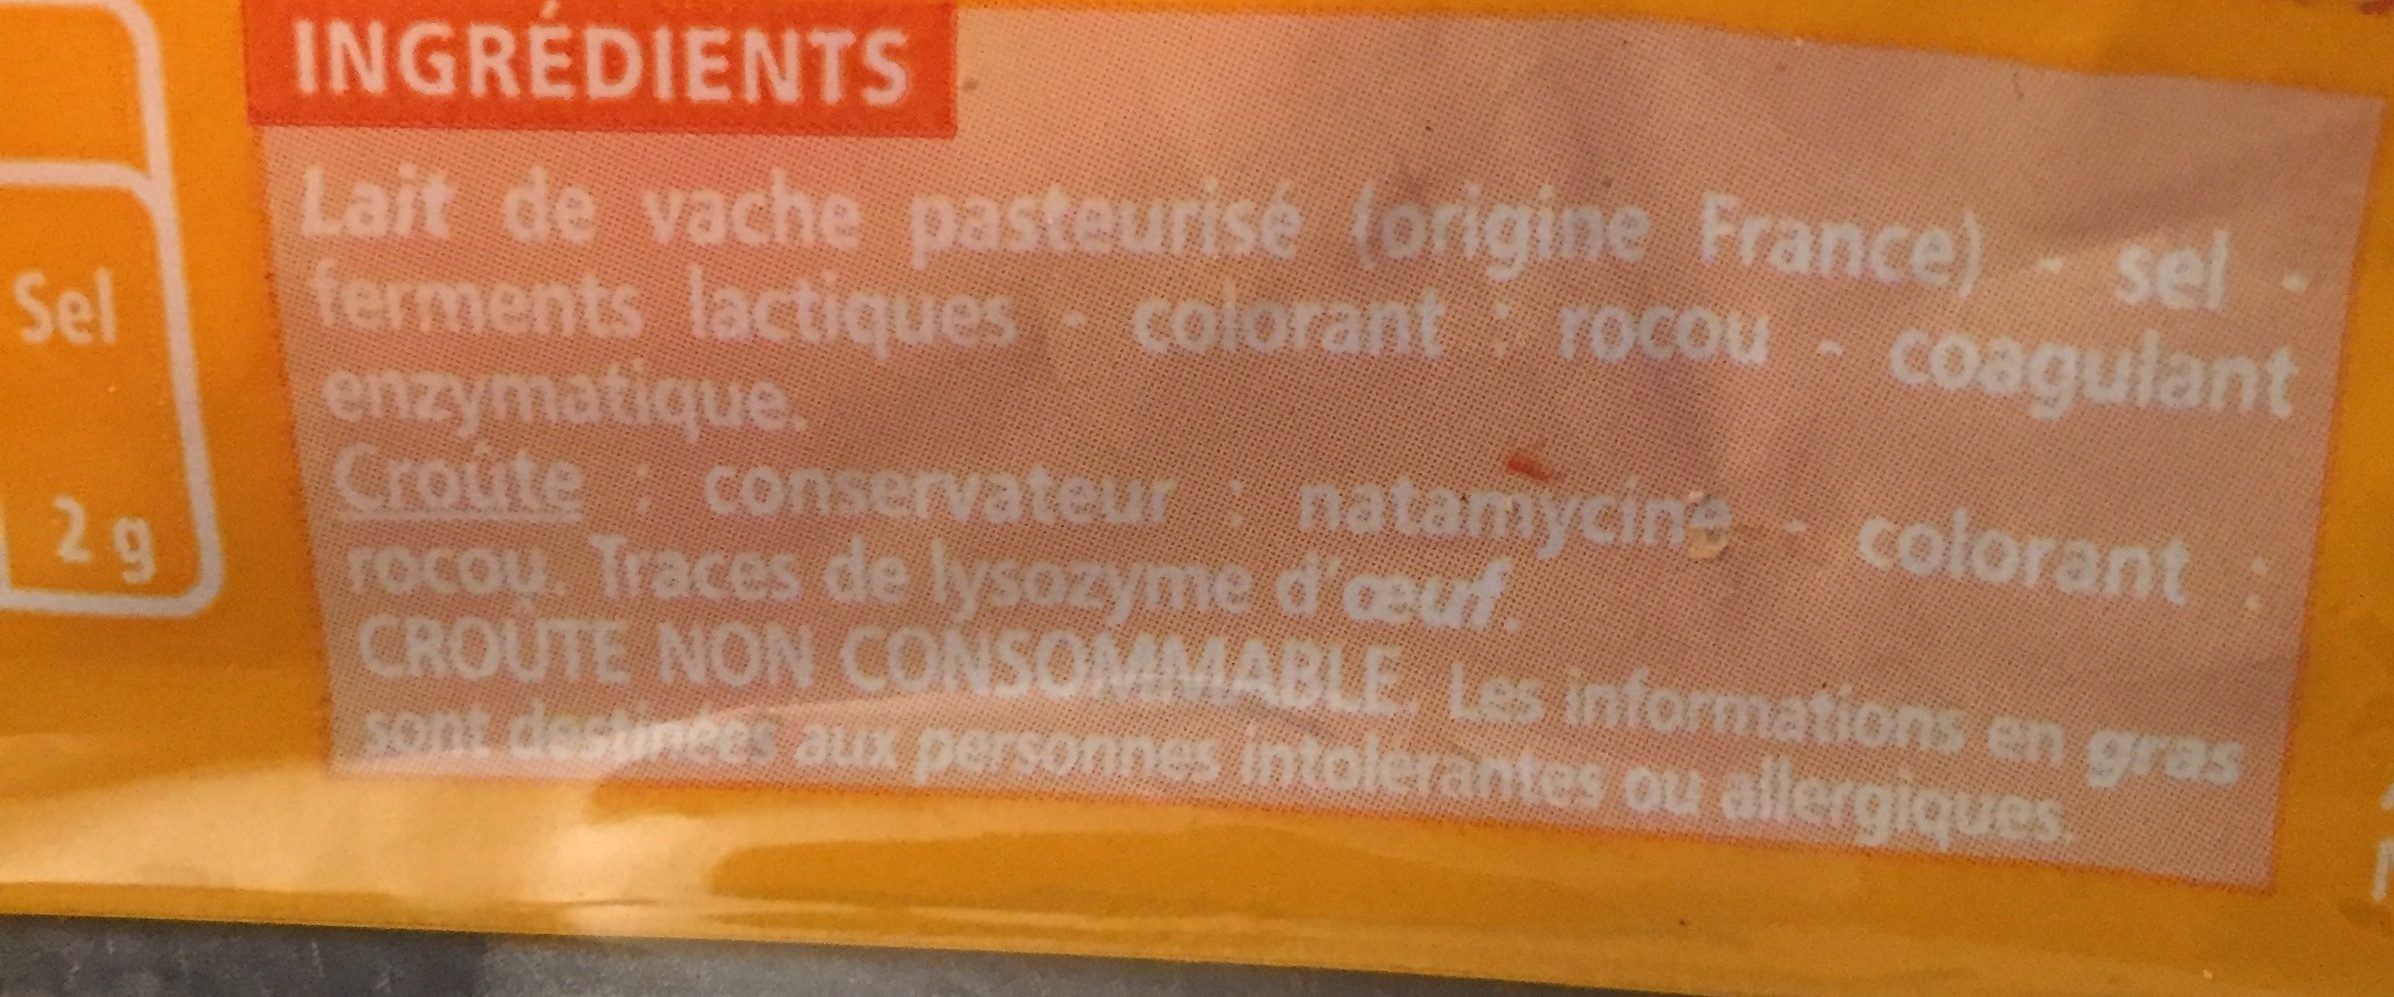 Mimolette - Ingredients - fr